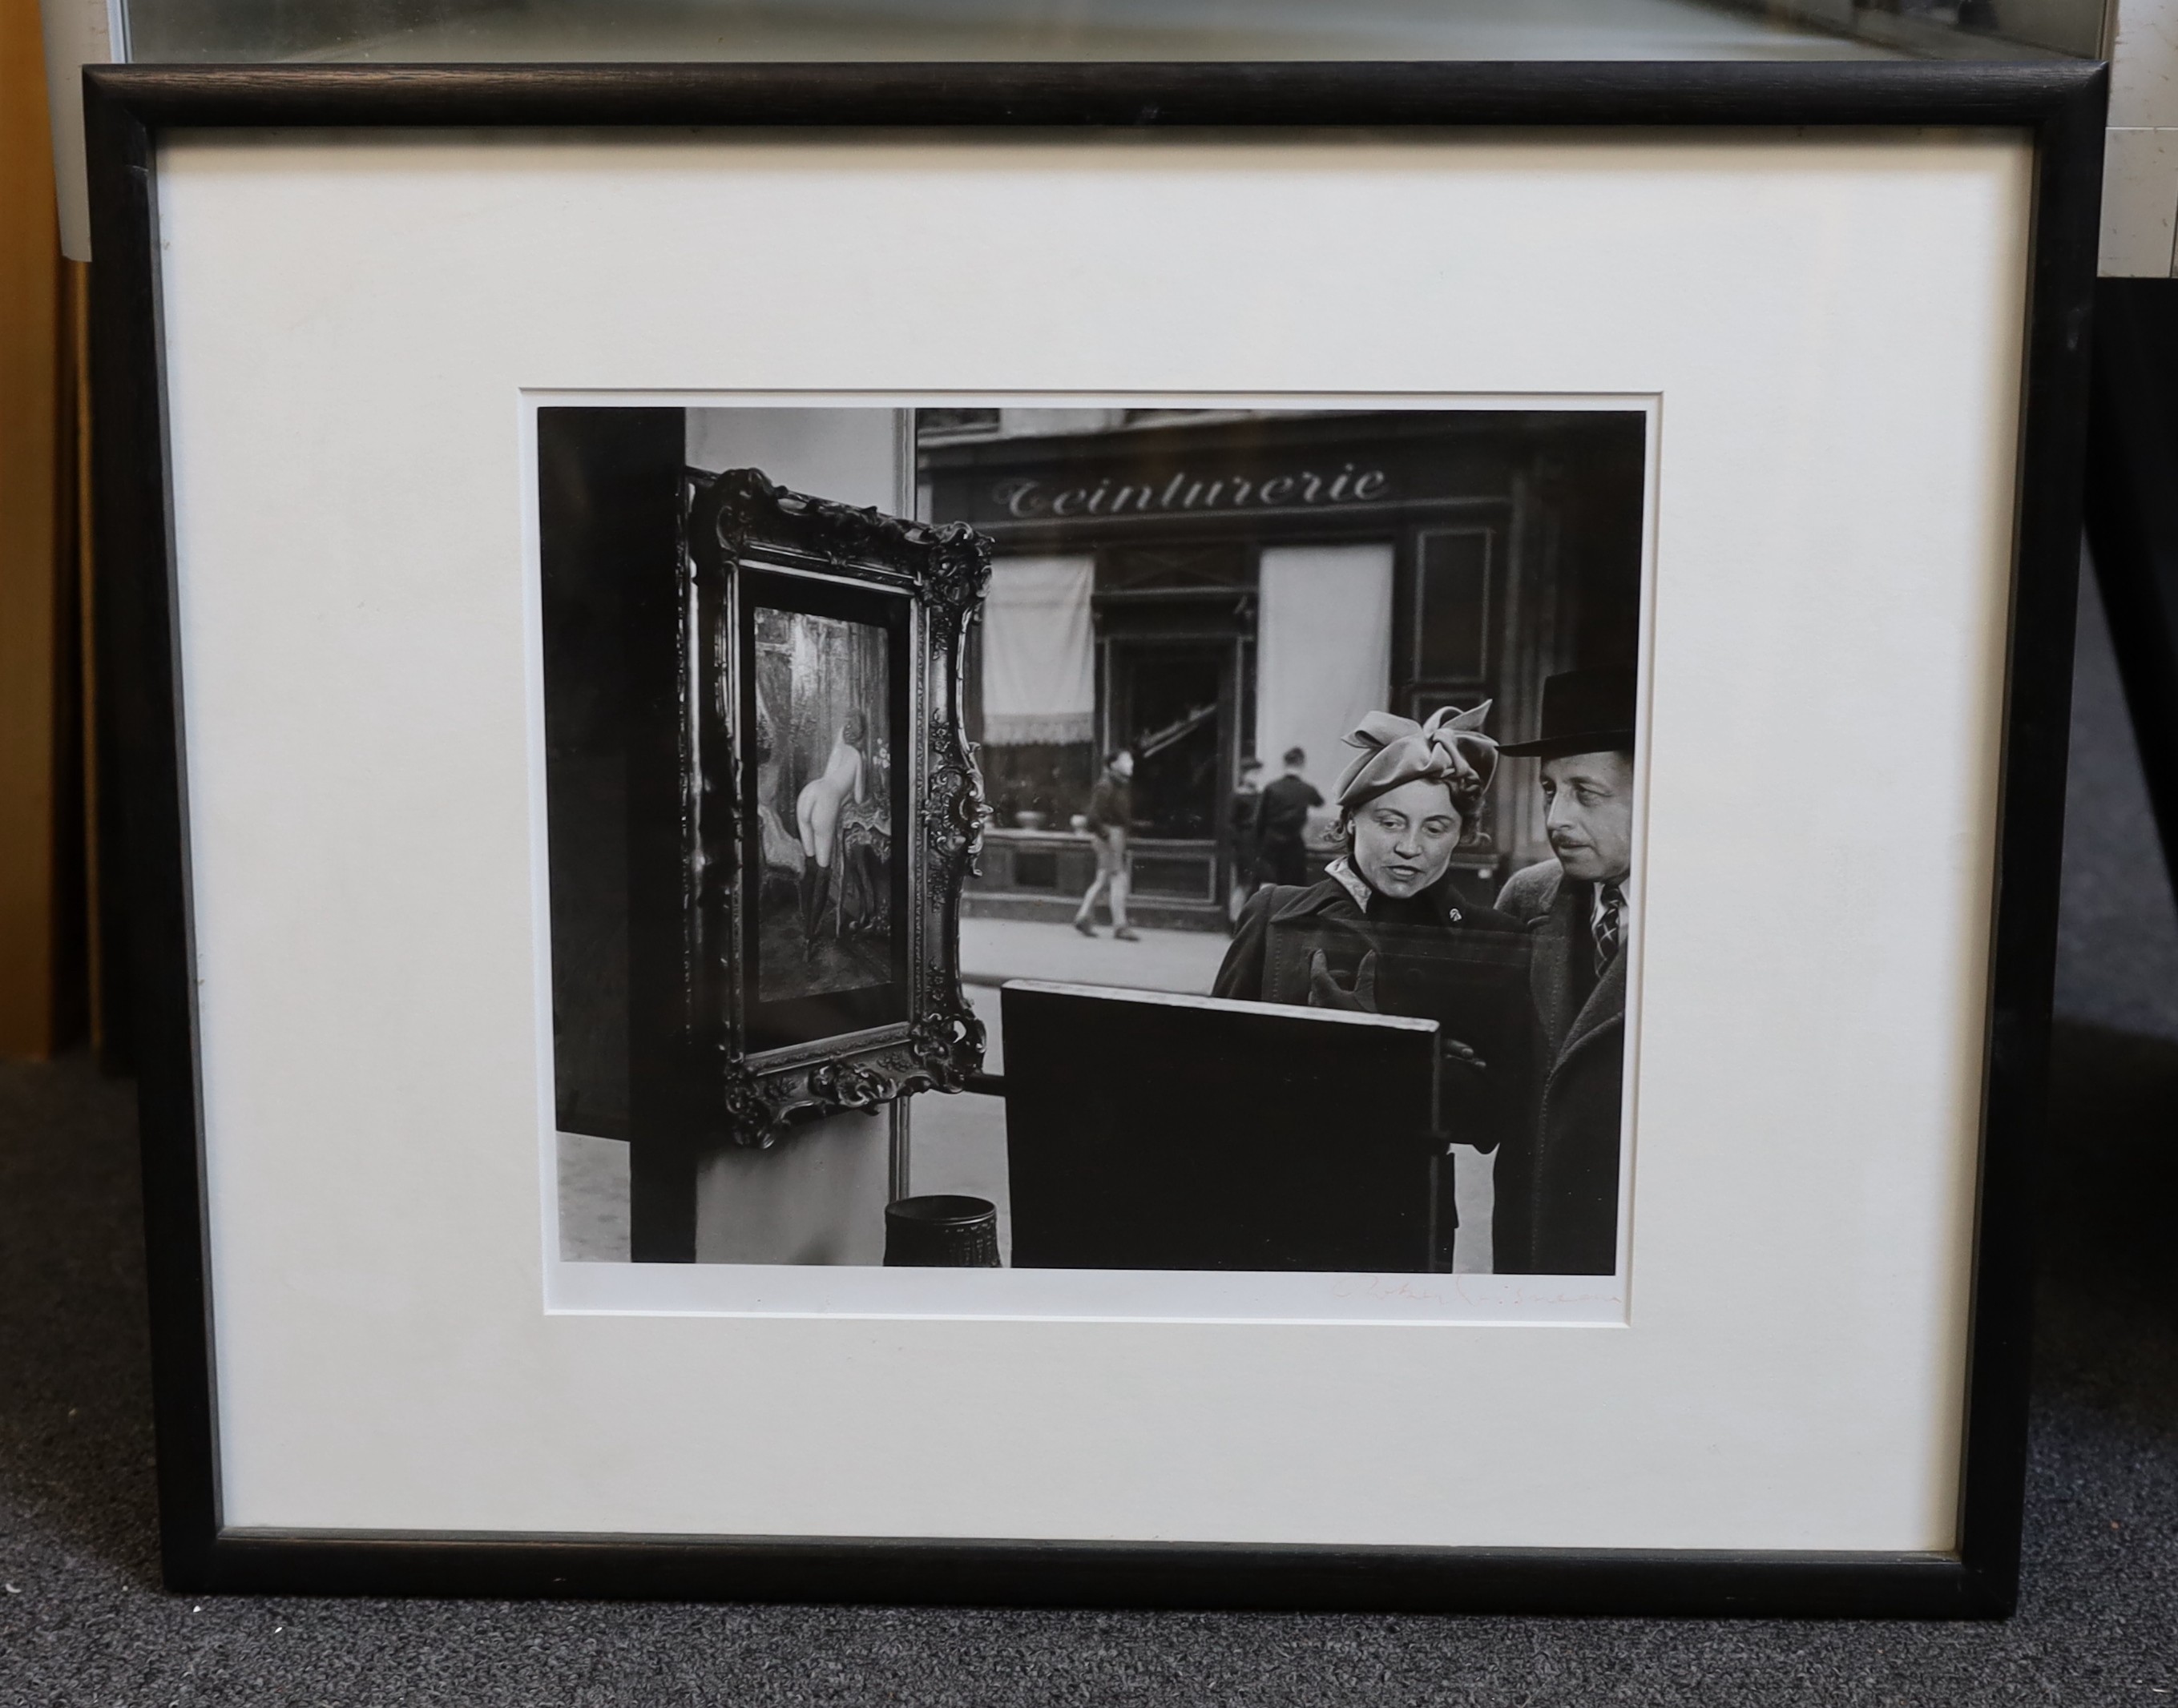 Robert Doisneau (French, 1912-1994), Un Regard Oblique, 1948, gelatin silver print on photo paper, 24 x 29.5 cm